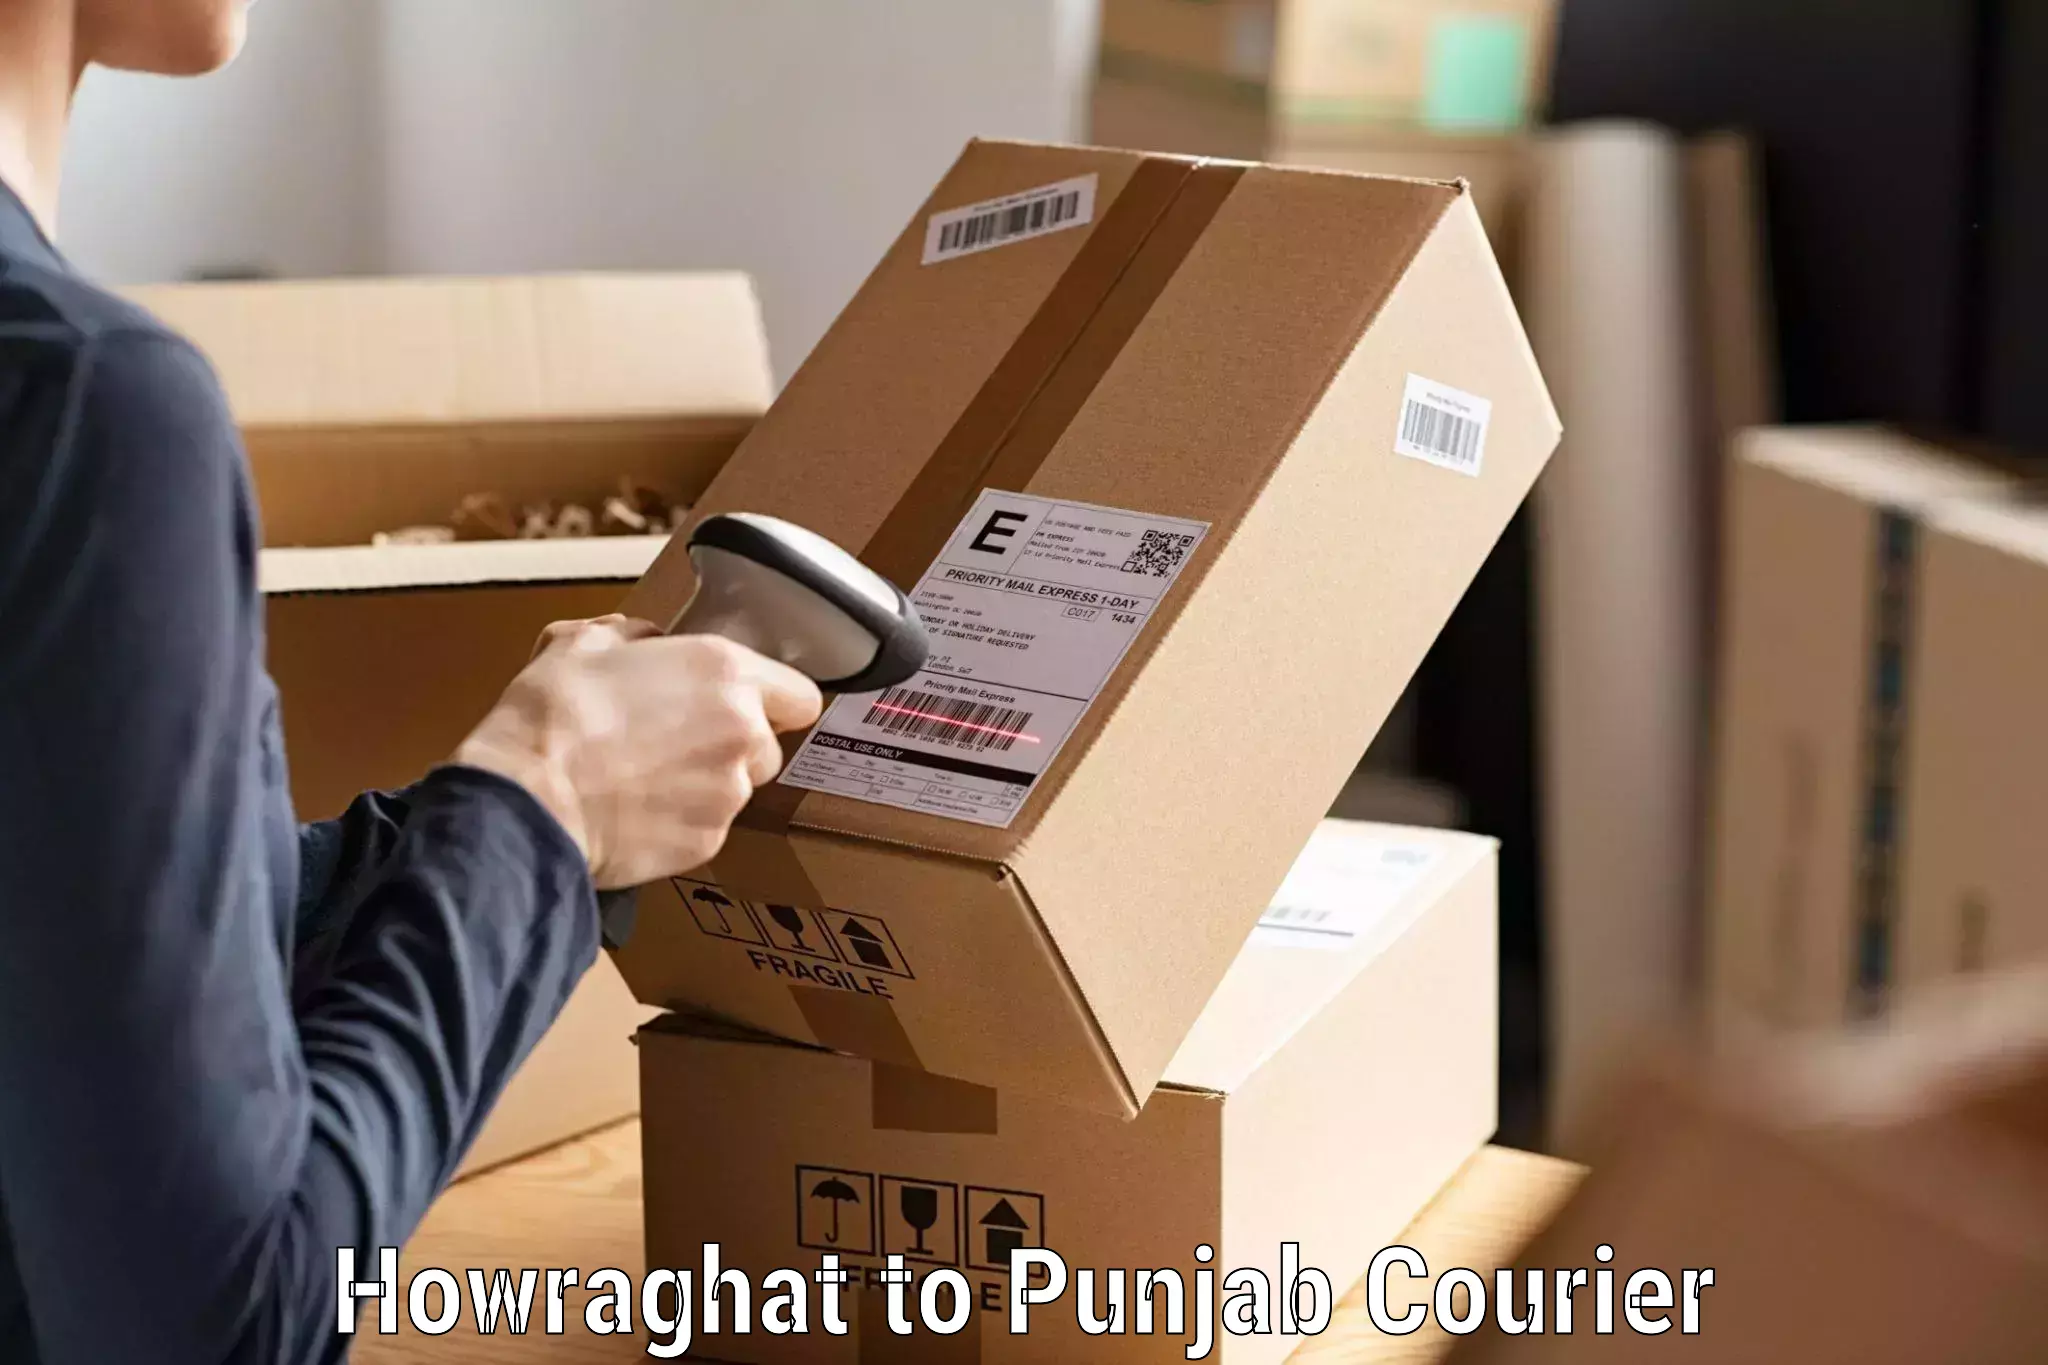 Return courier service Howraghat to Abohar